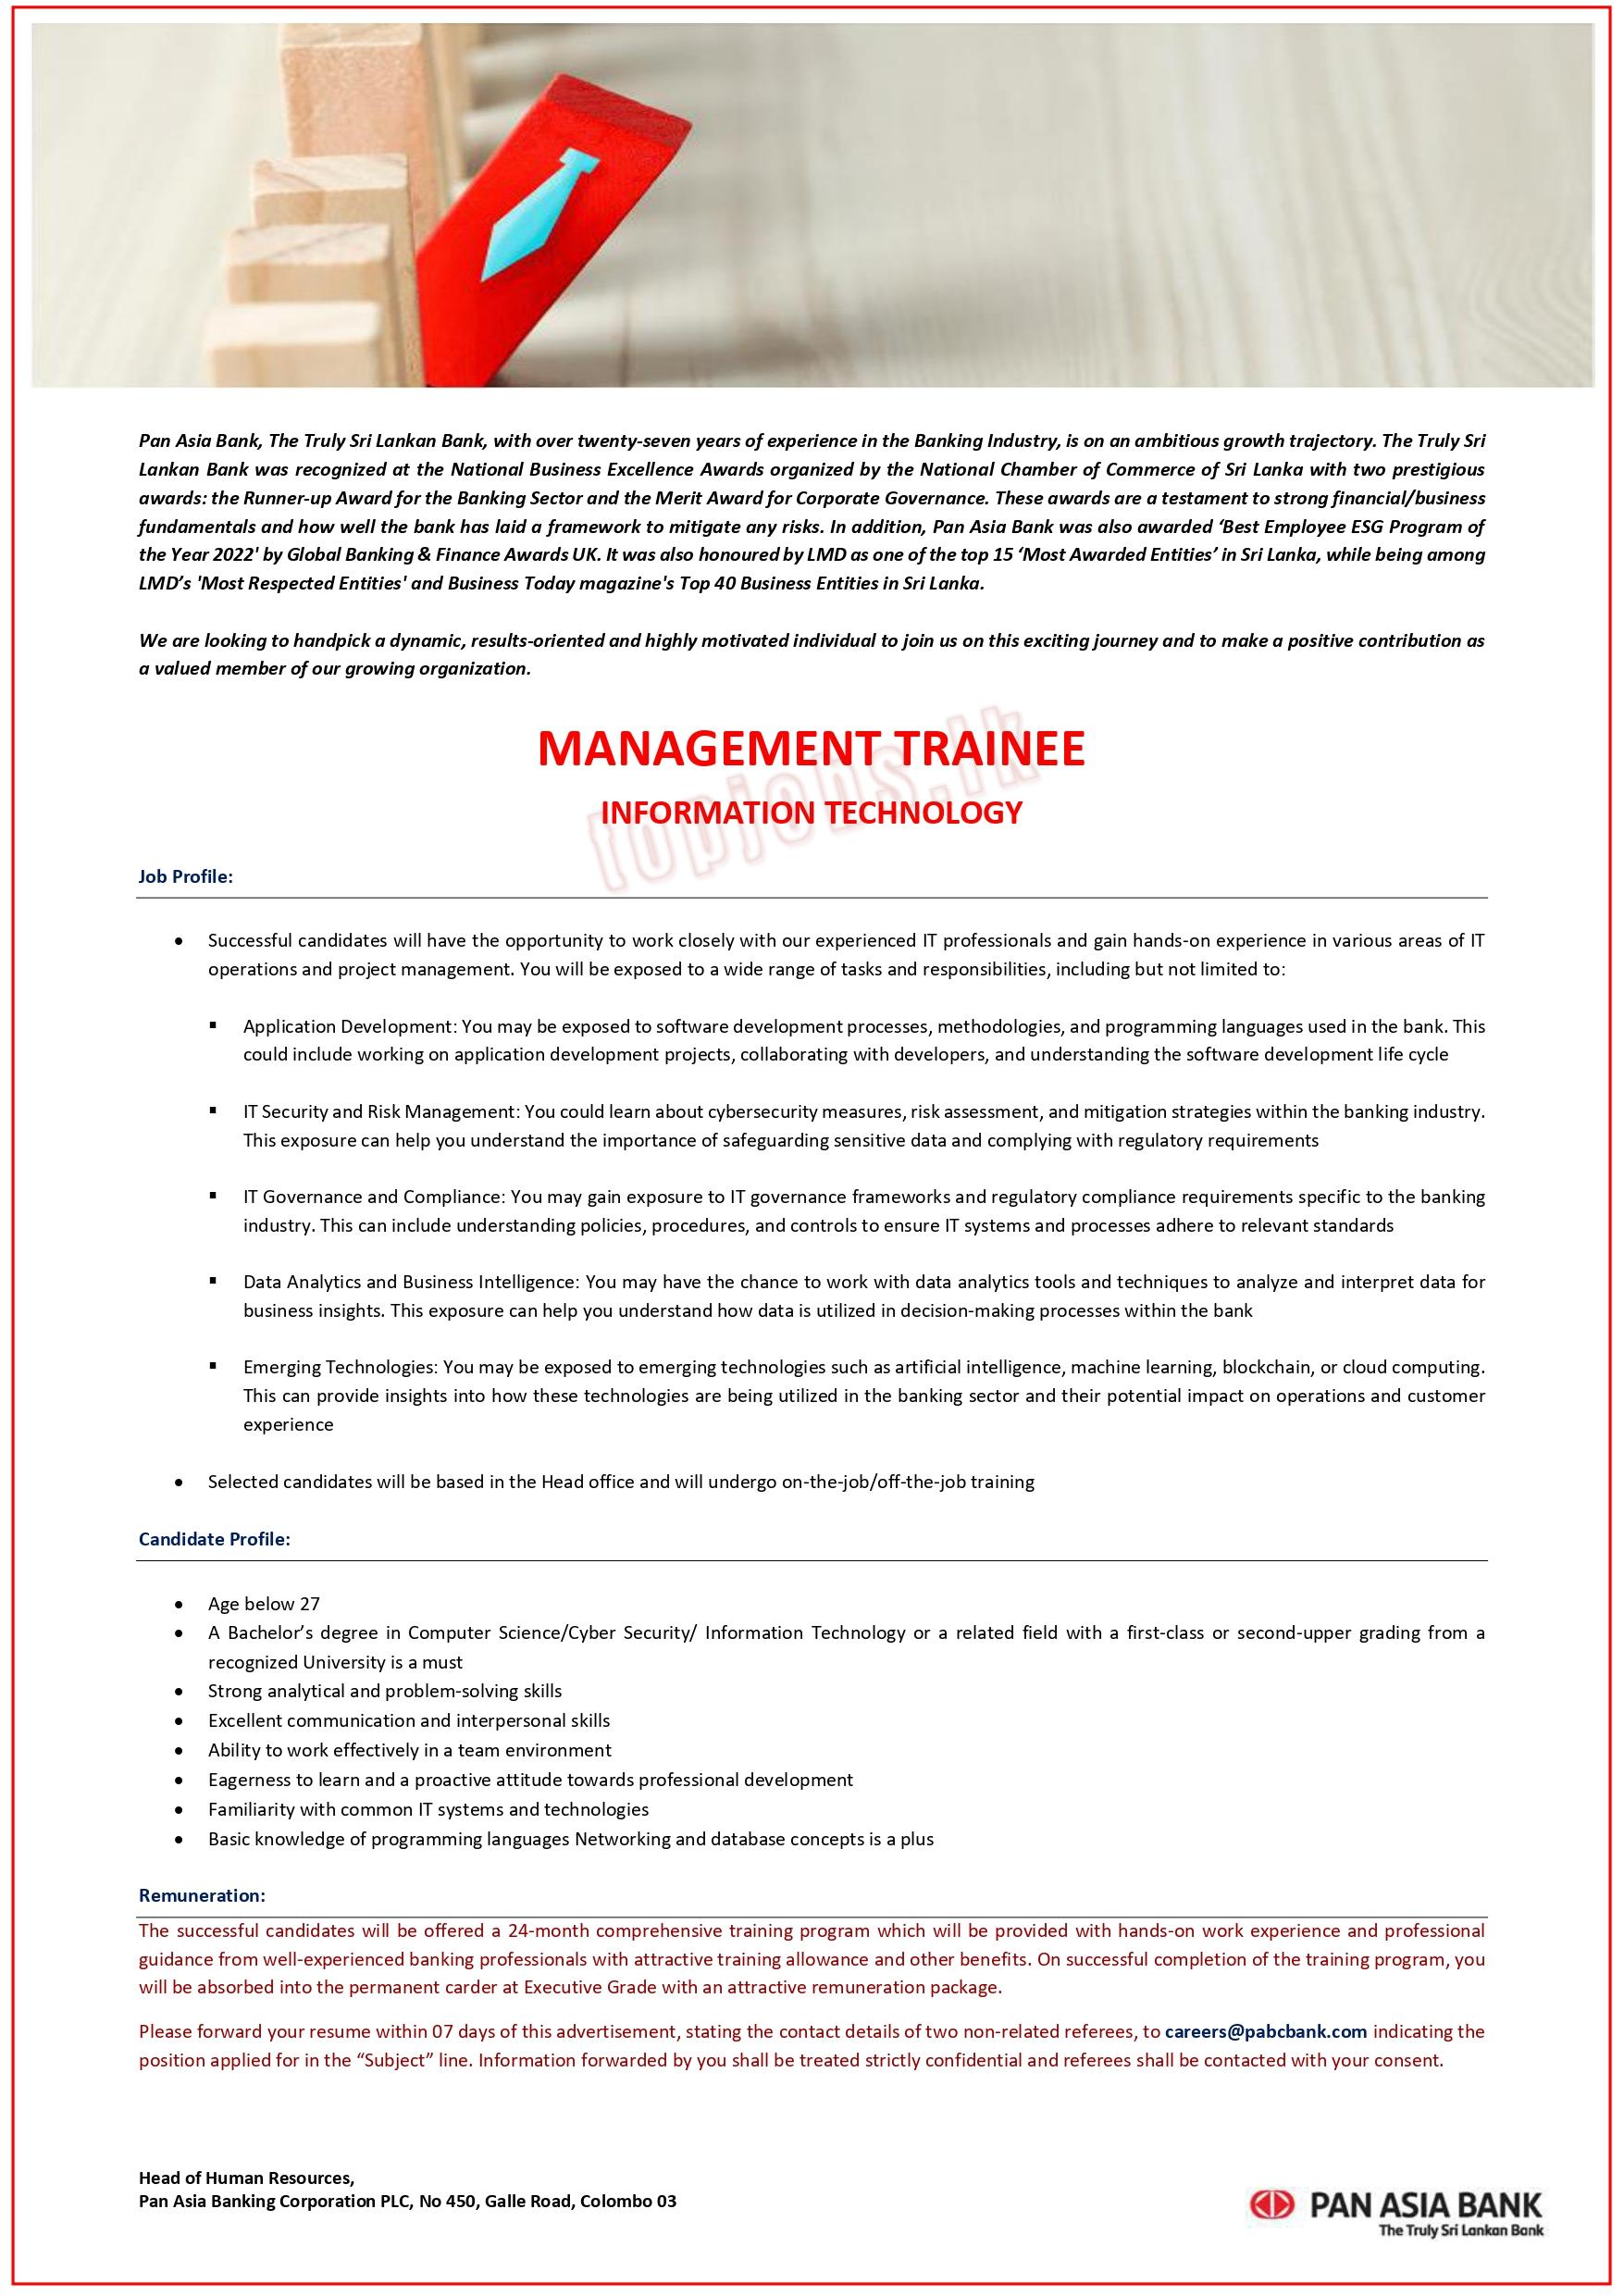 Management Trainee - Information Technology